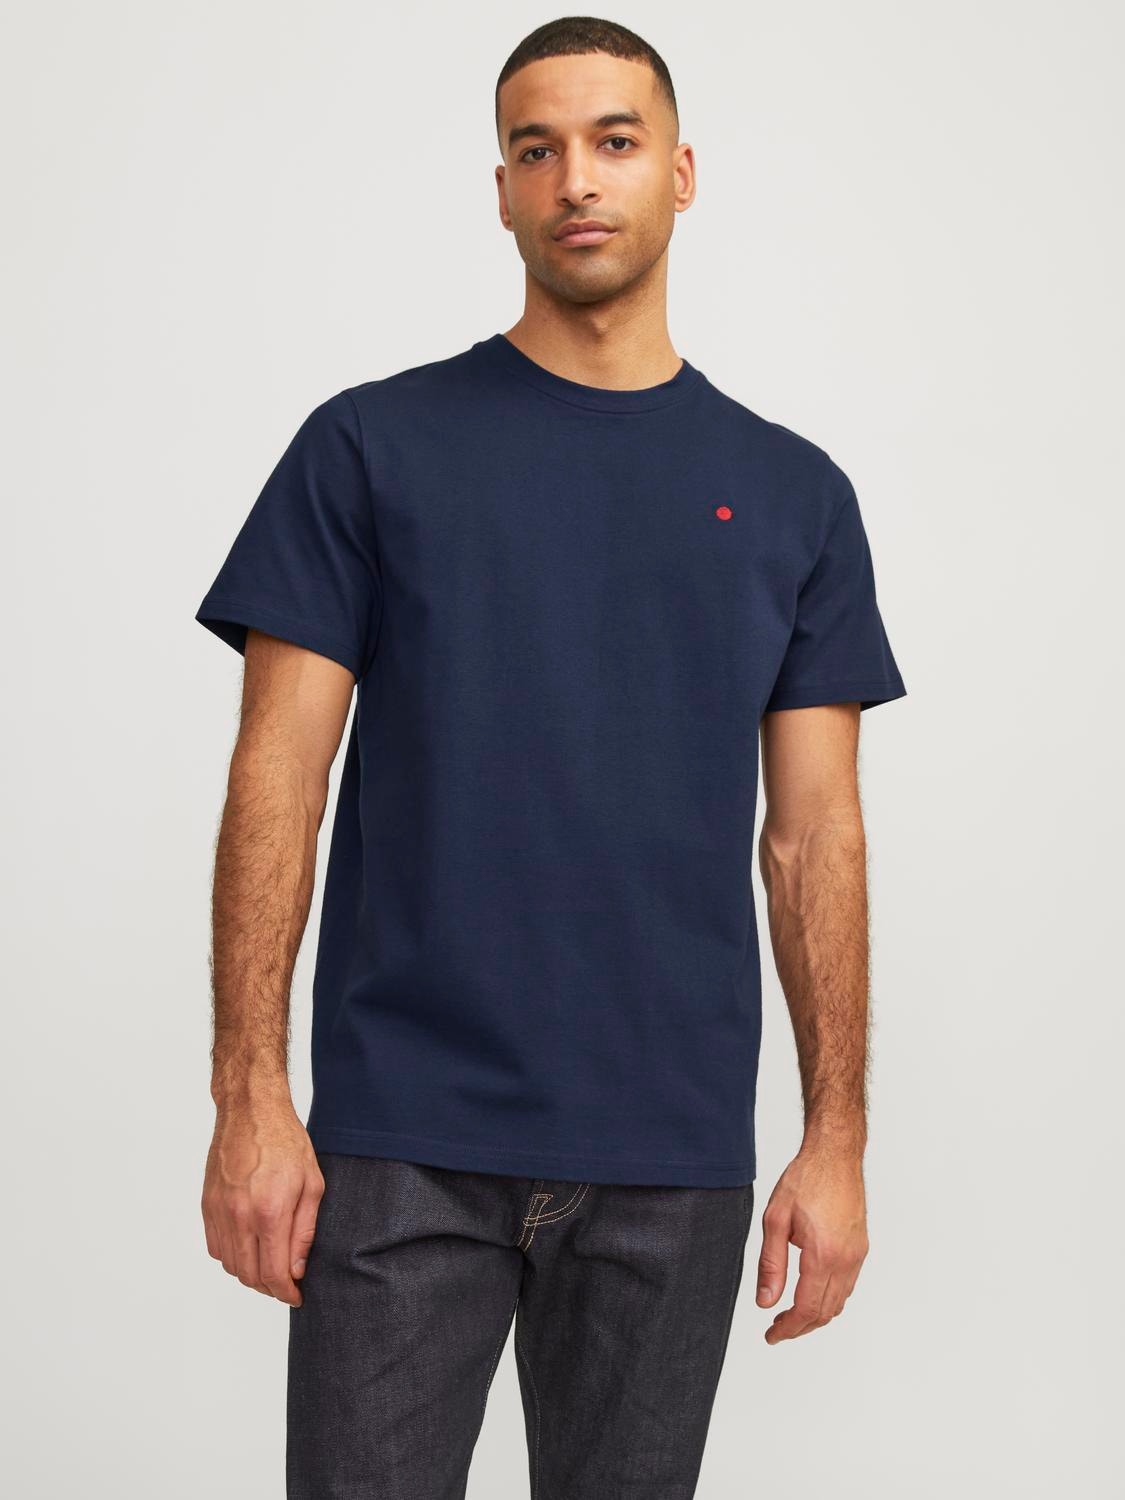 Jack & Jones RDD T-shirt Liso Decote Redondo -Navy Blazer - 12254551